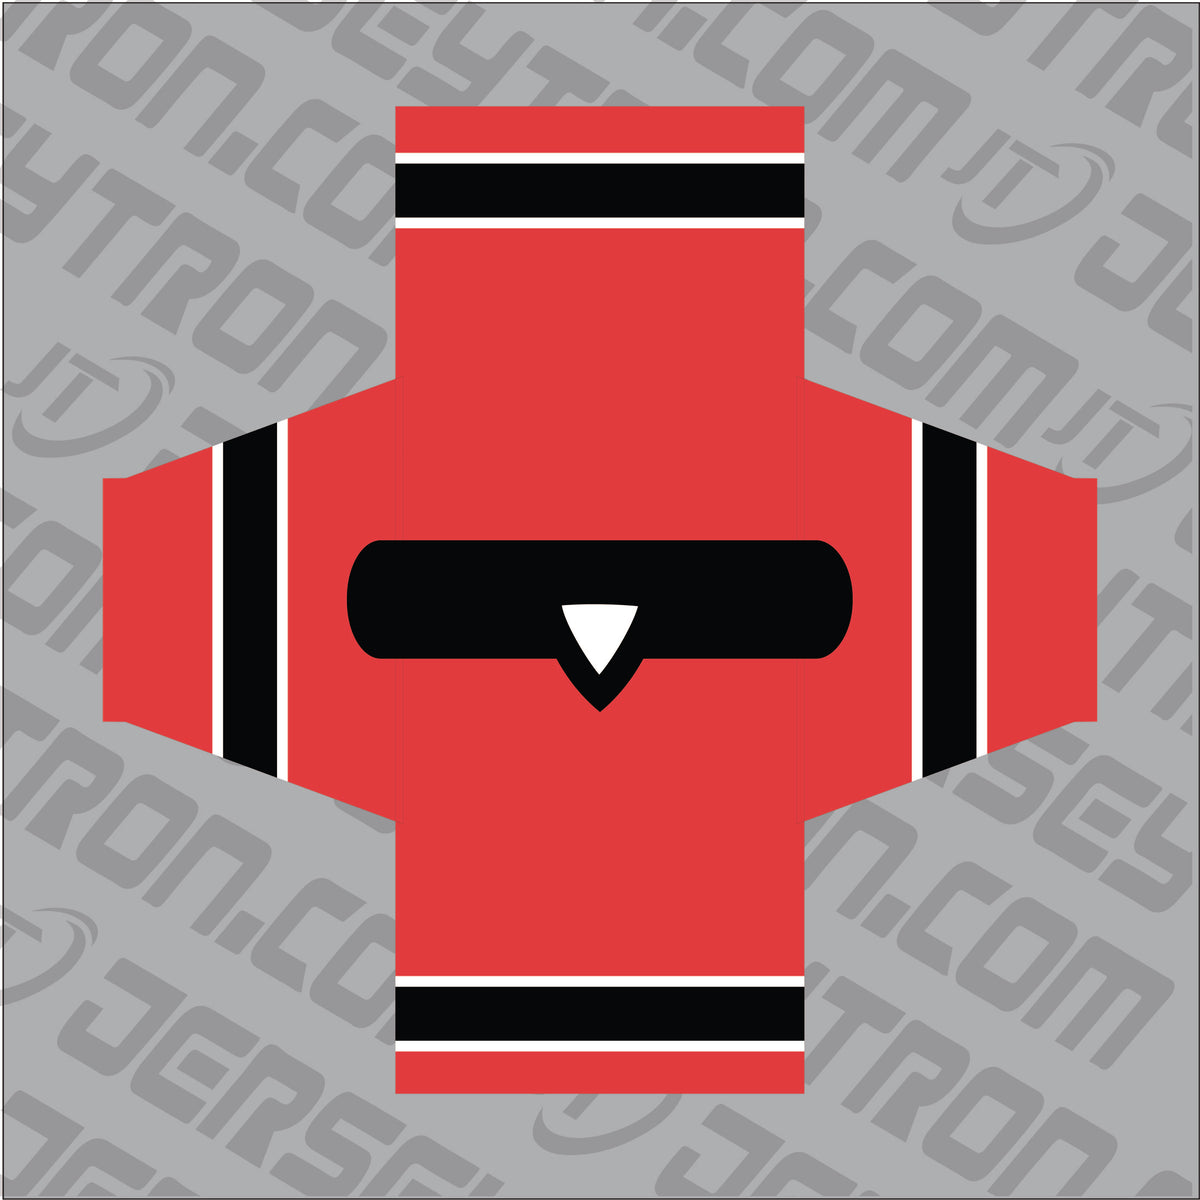 Boston Bruins Hockey Jersey - TronX DJ300 Replica Gamewear - JerseyTron